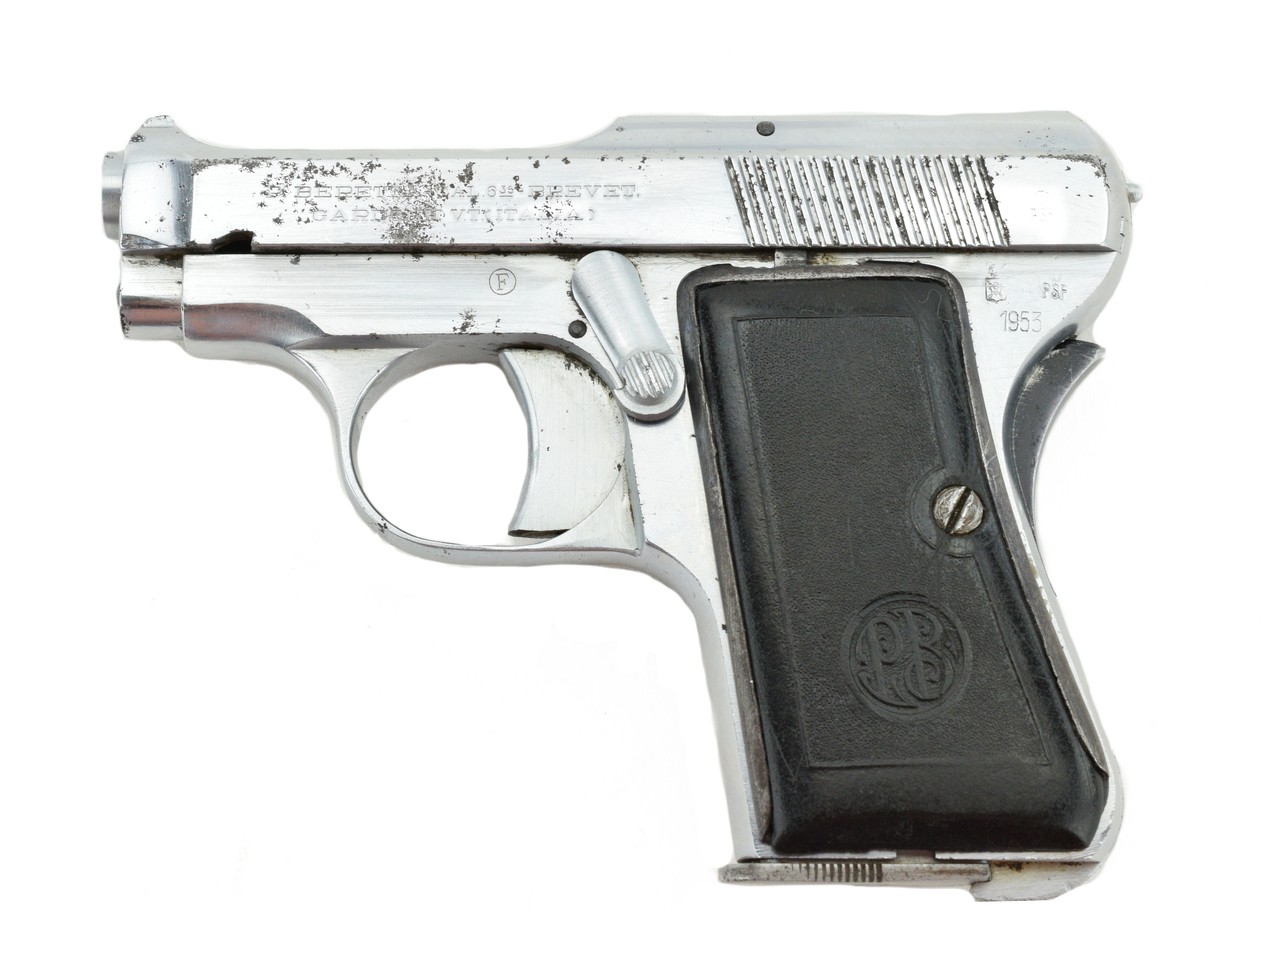 Beretta 1919 .25 ACP caliber pistol for sale.